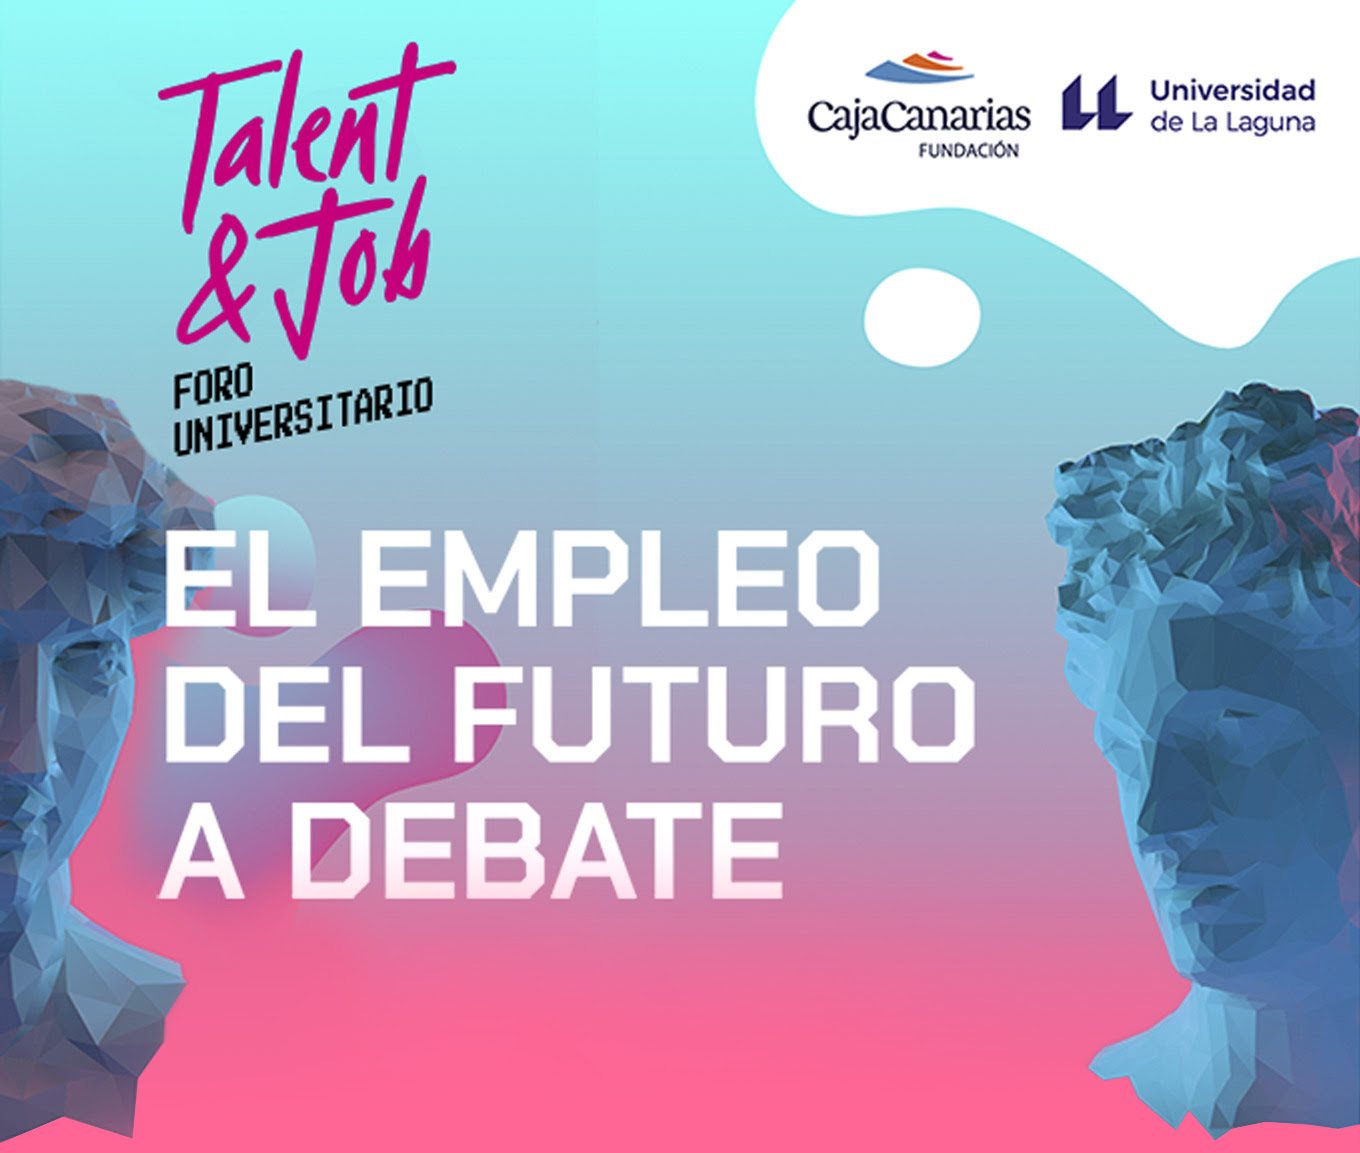 Foro Universitario "Talent & Job". El Empleo del Futuro a Debate